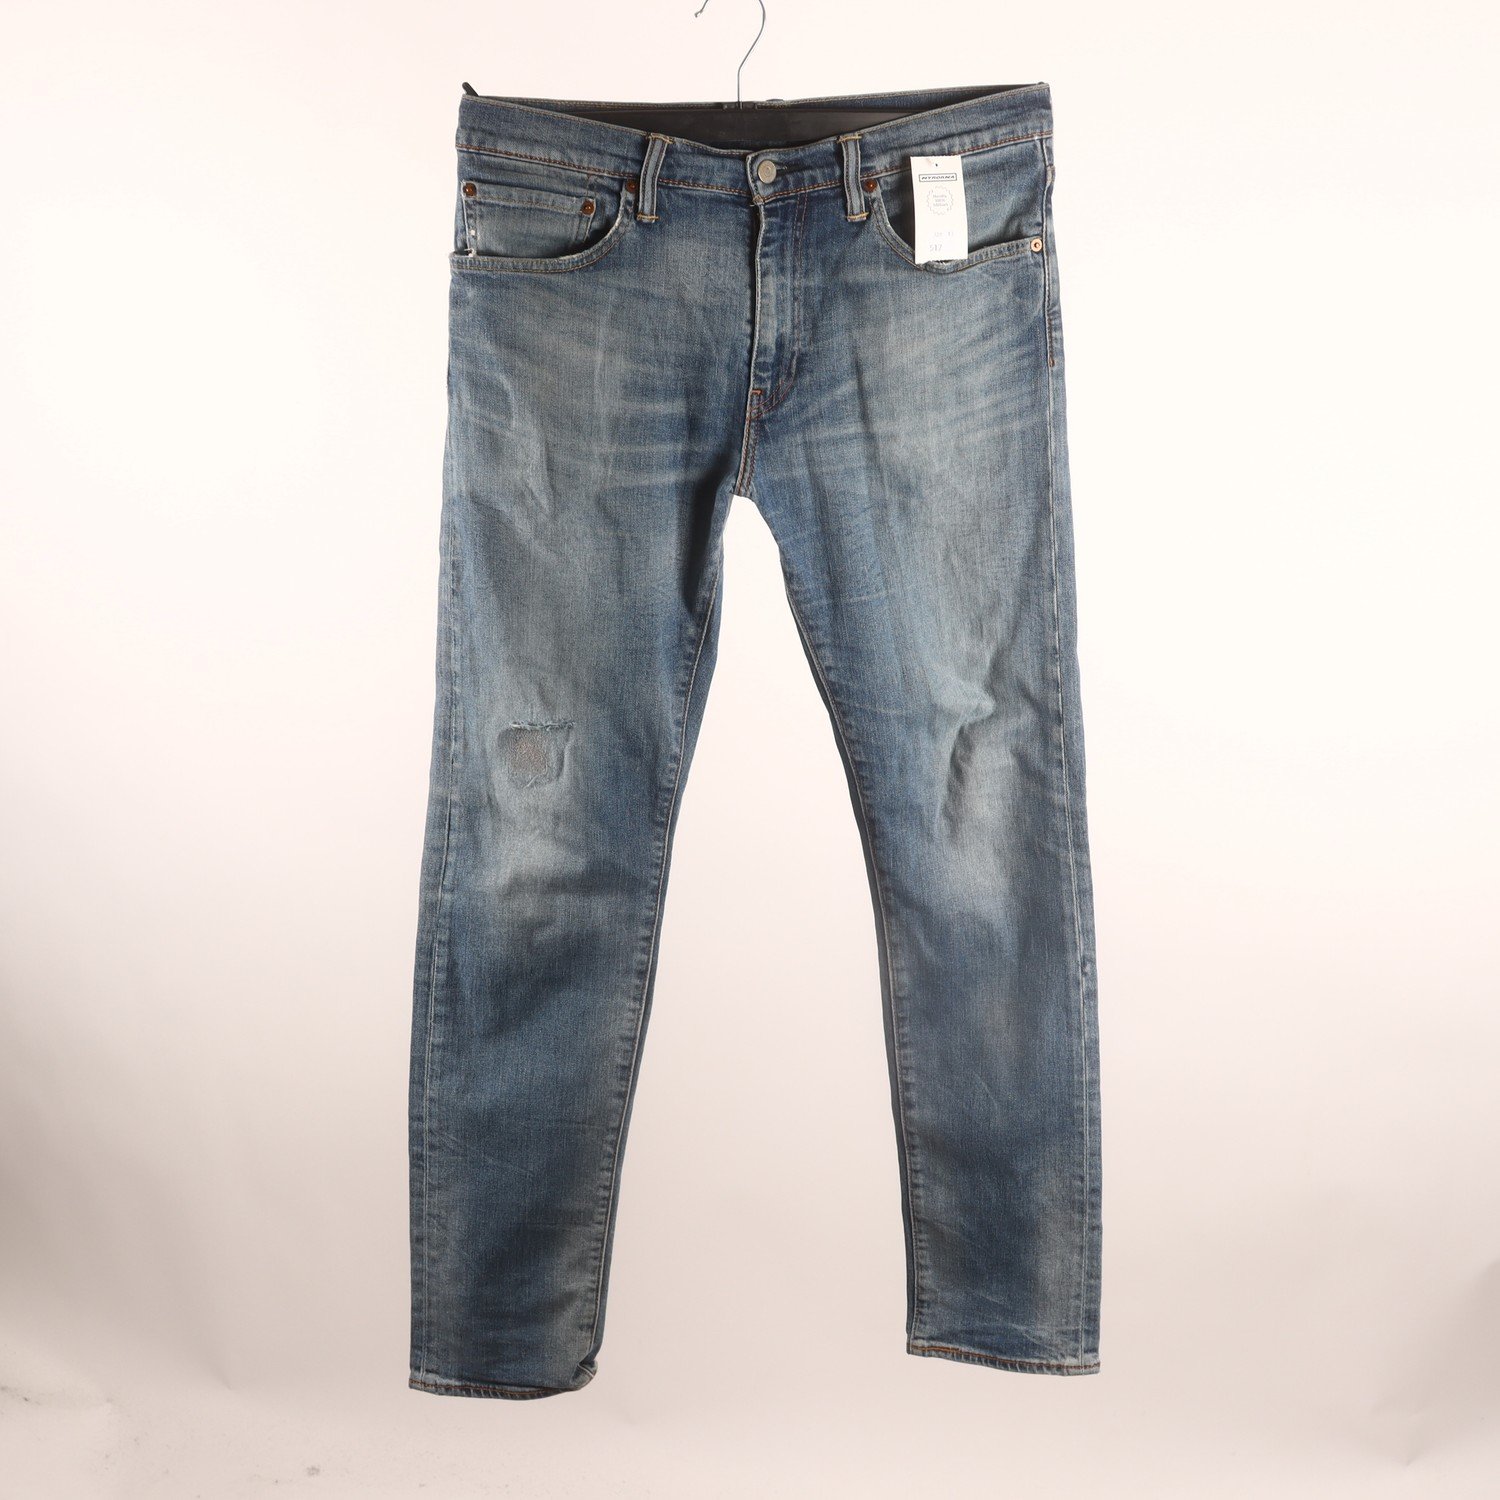 Jeans, Levis 508, Blå, Stl. 31/32